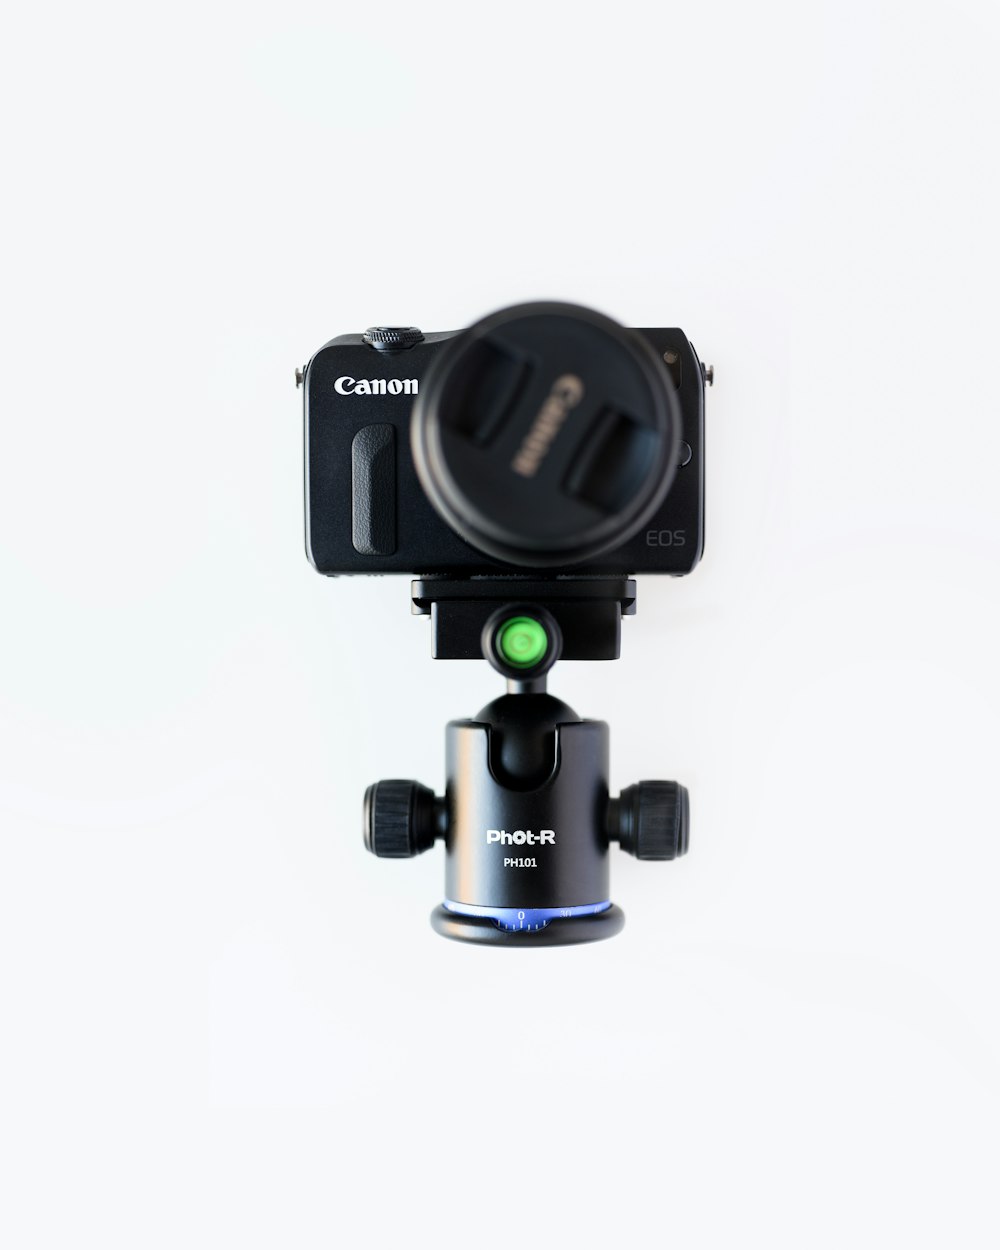 schwarze Canon-Kamera